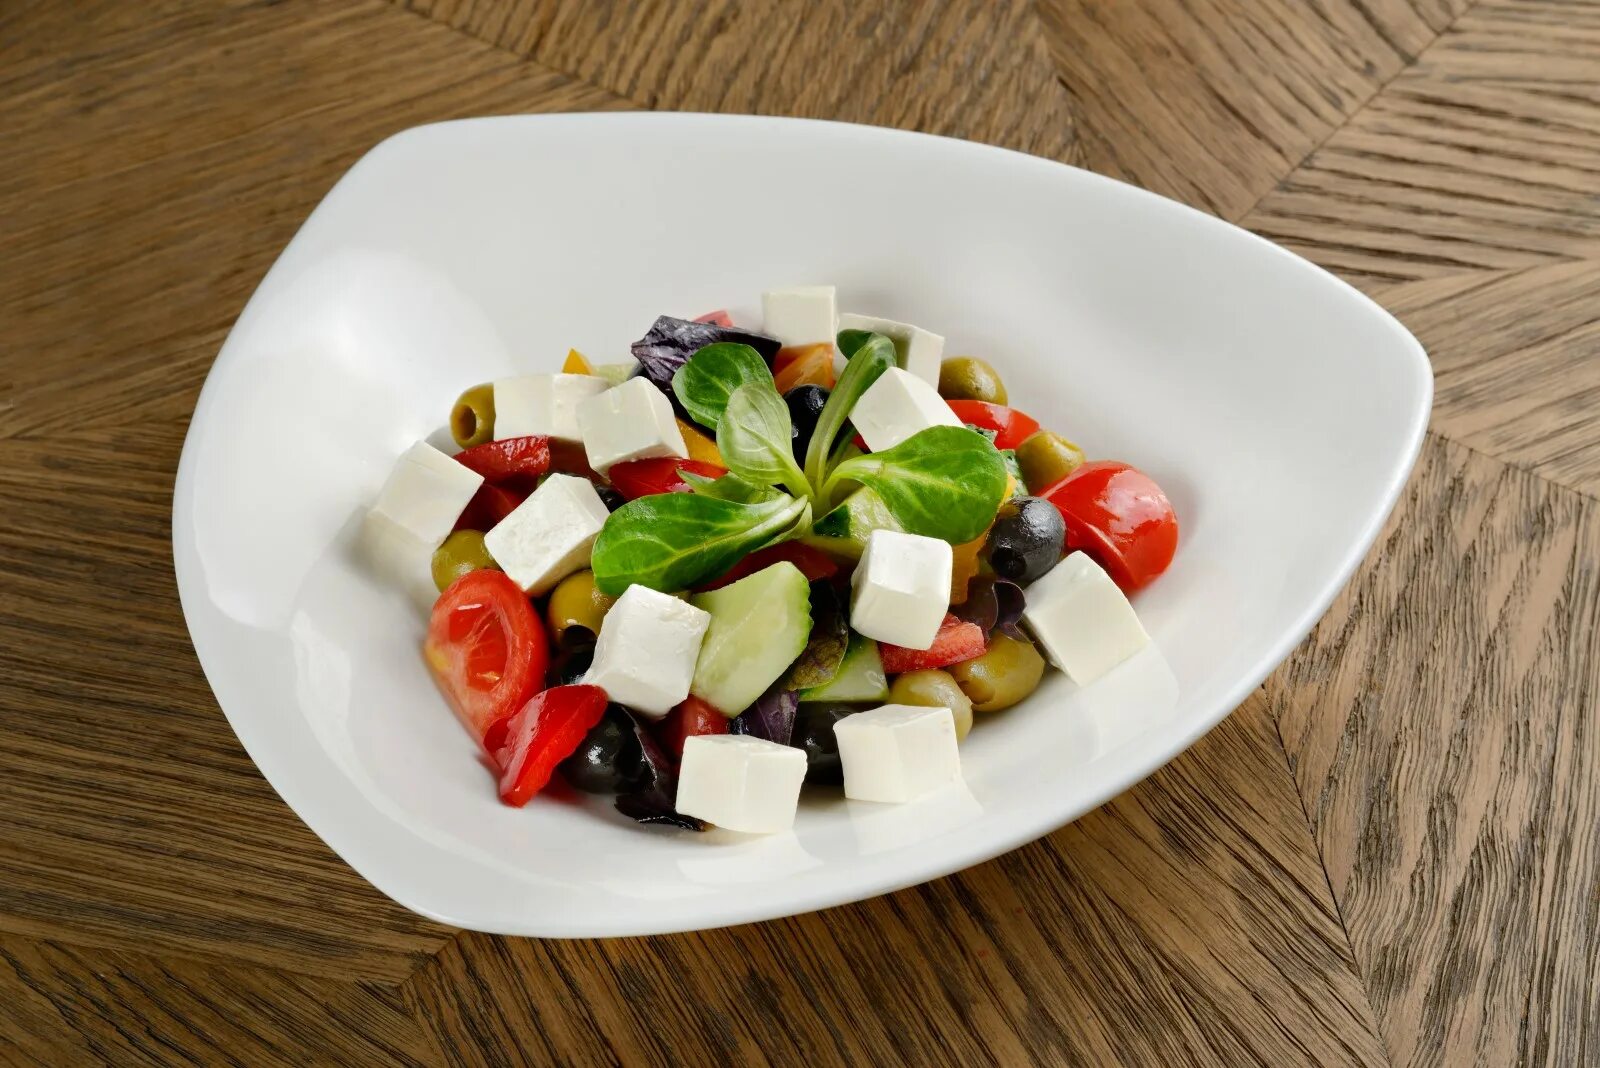 Ресторан Пифагор греческий салат. Греческий салат ресторанная подача. Салат греческий красивая подача. Греческий салат в ресторане. Курица фетакса